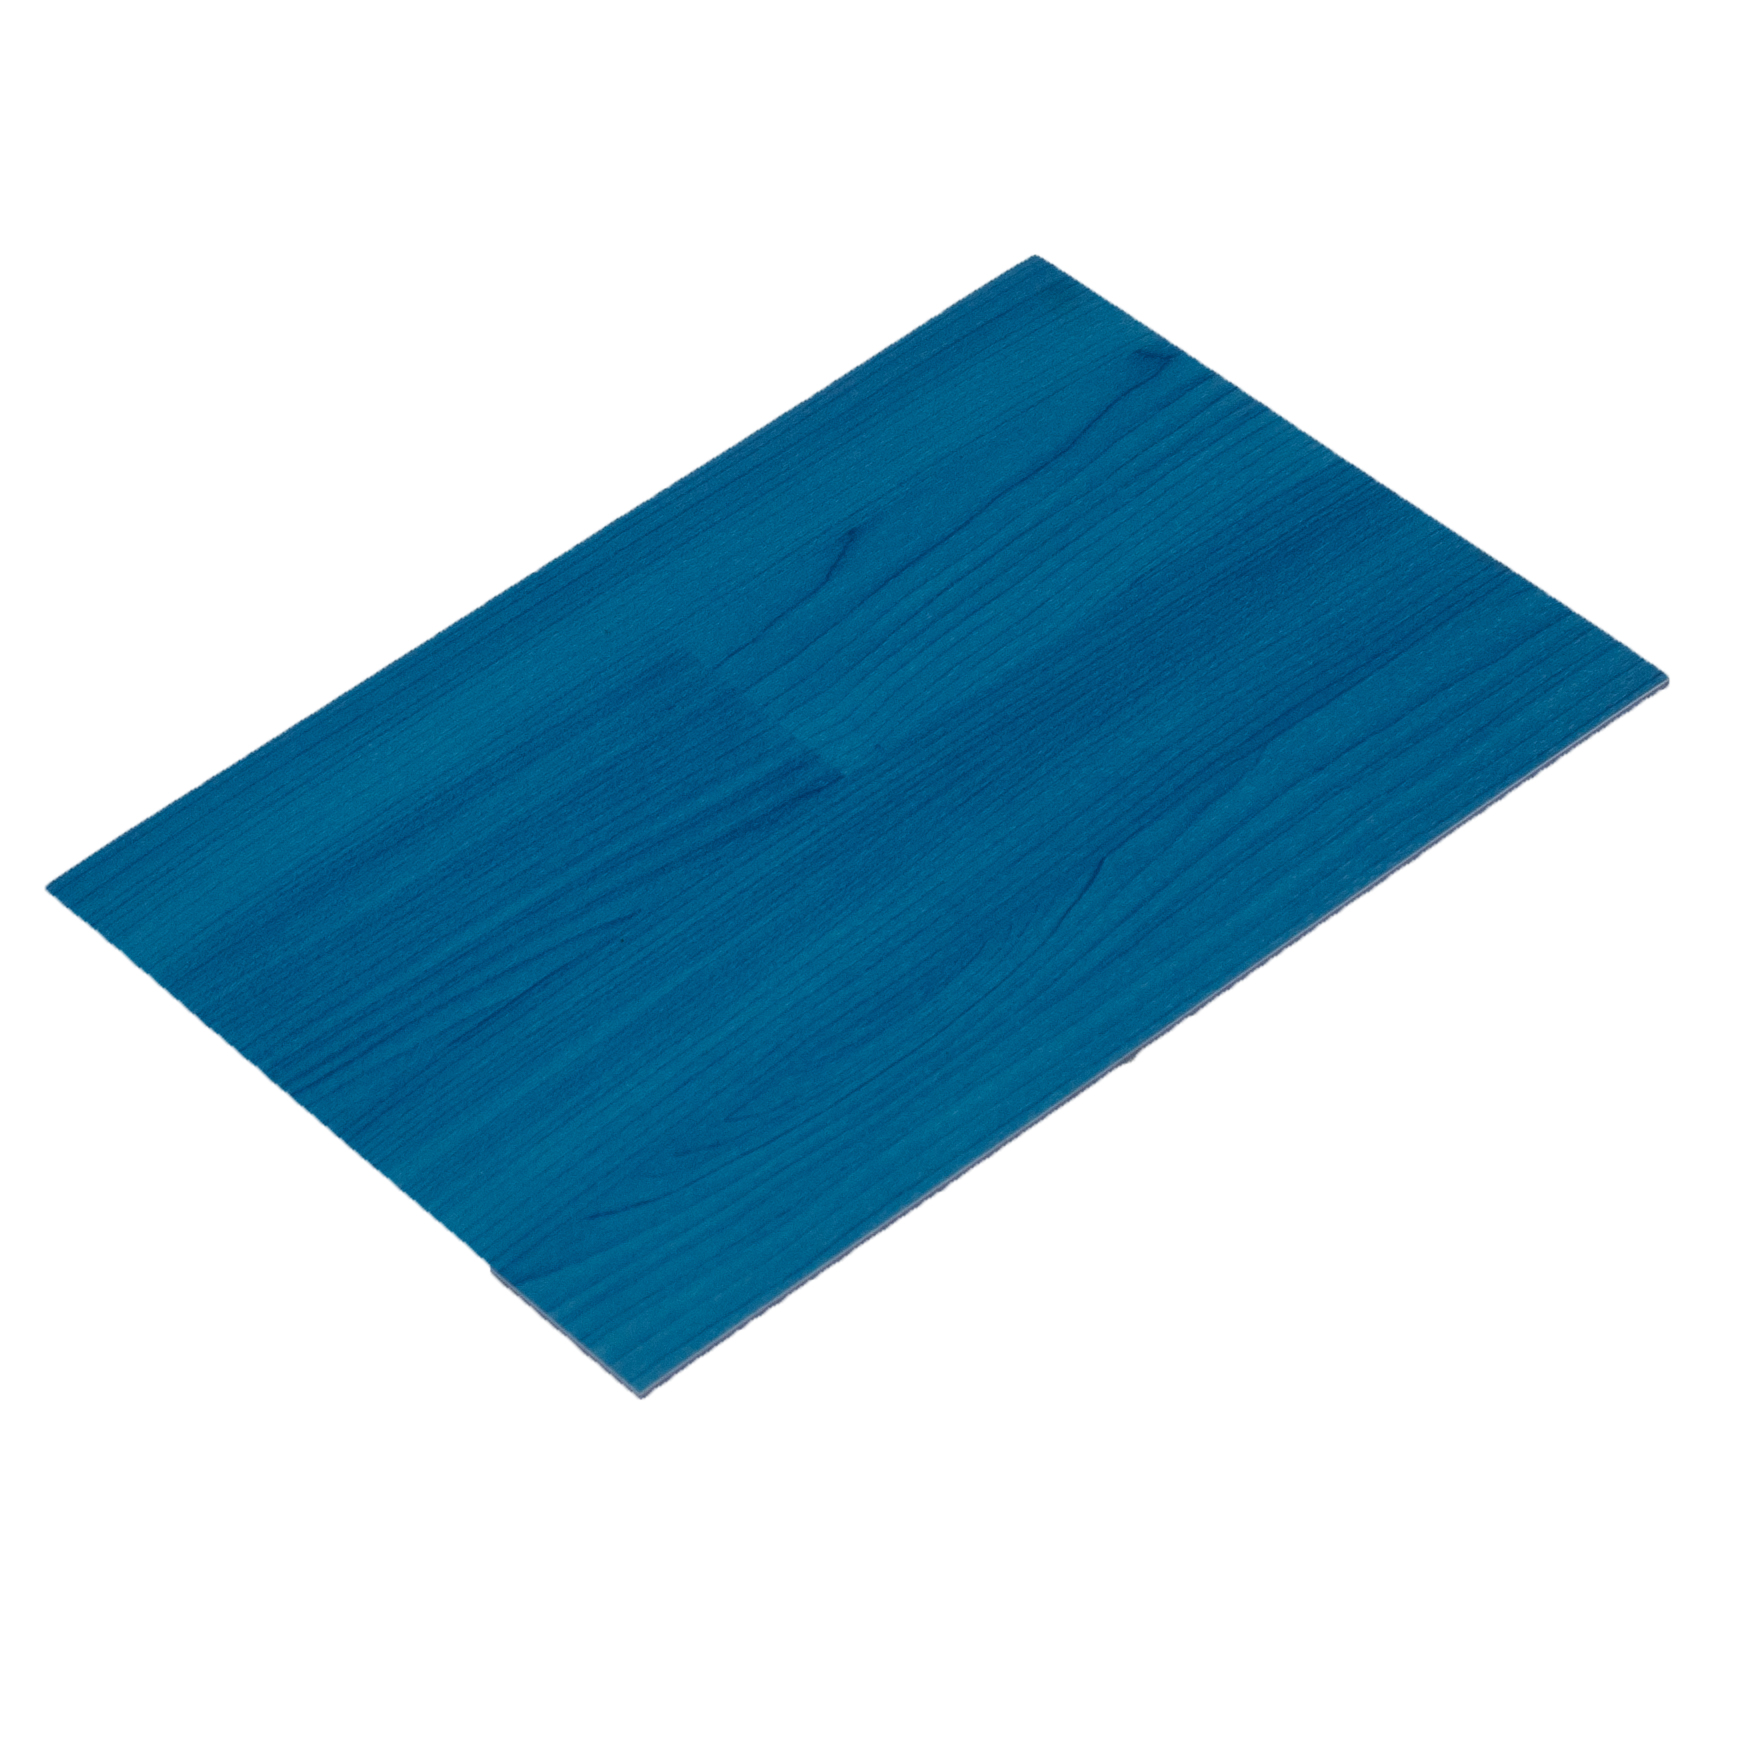 Laminate Sports PVC Flooring For Basement